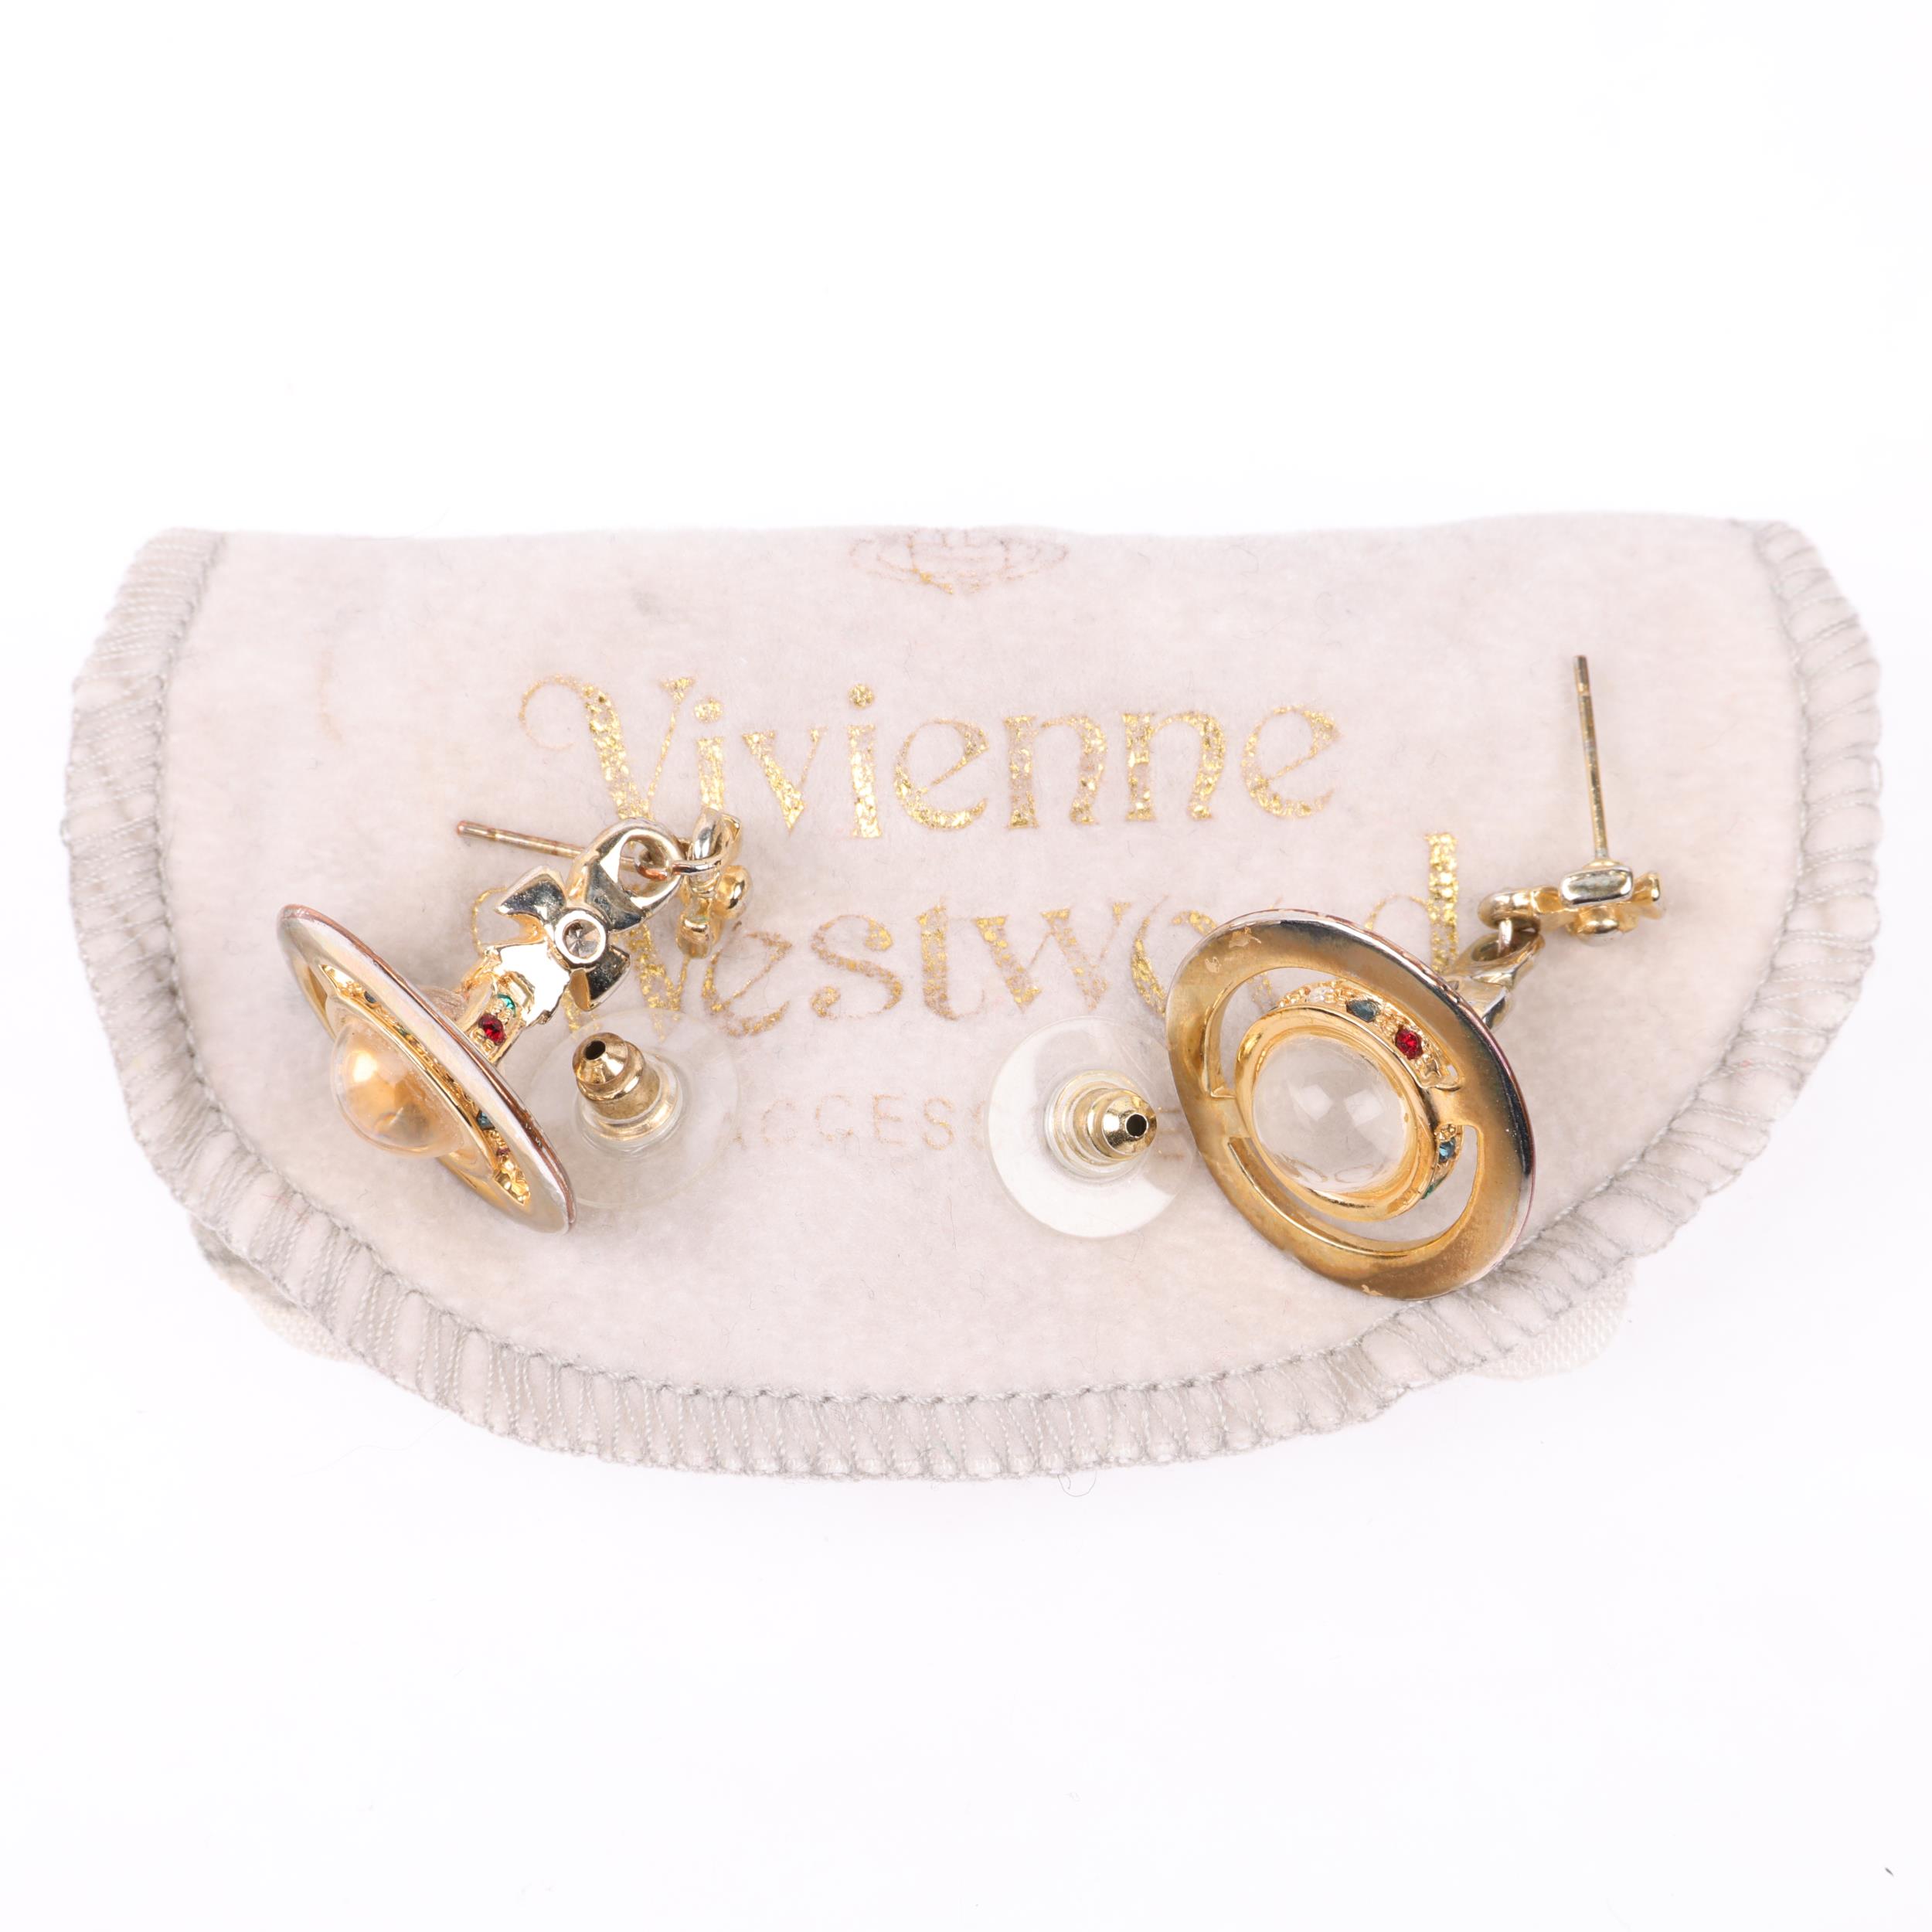 VIVIENNE WESTWOOD - a pair of gilt-metal and crystal orb drop earrings, 33.6mm, 16.1g, boxed - Image 3 of 3